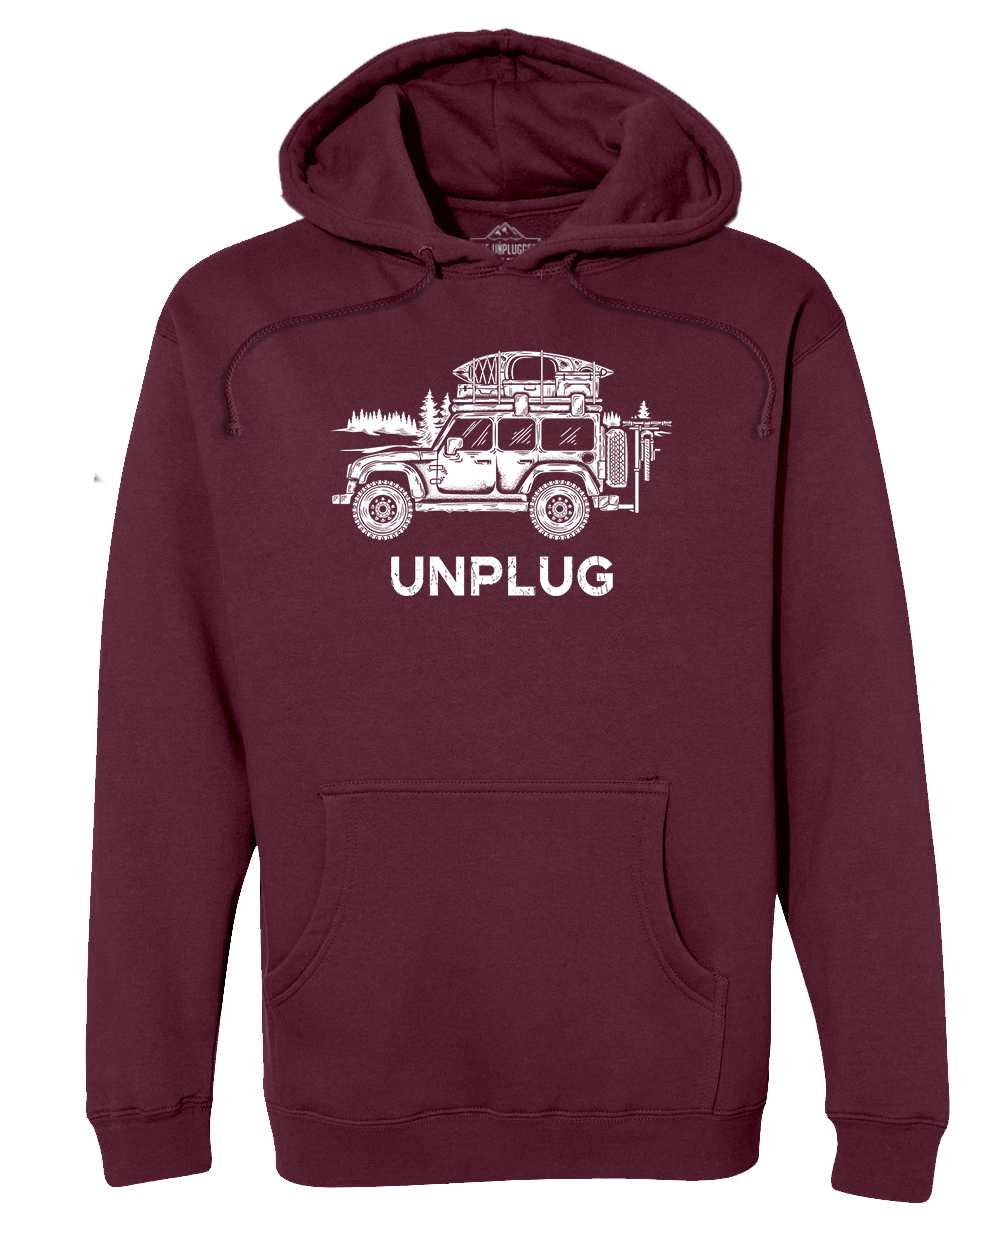 OFF-ROAD VEHICLE Premium Heavyweight Hooded Sweatshirt - Life Unplugged